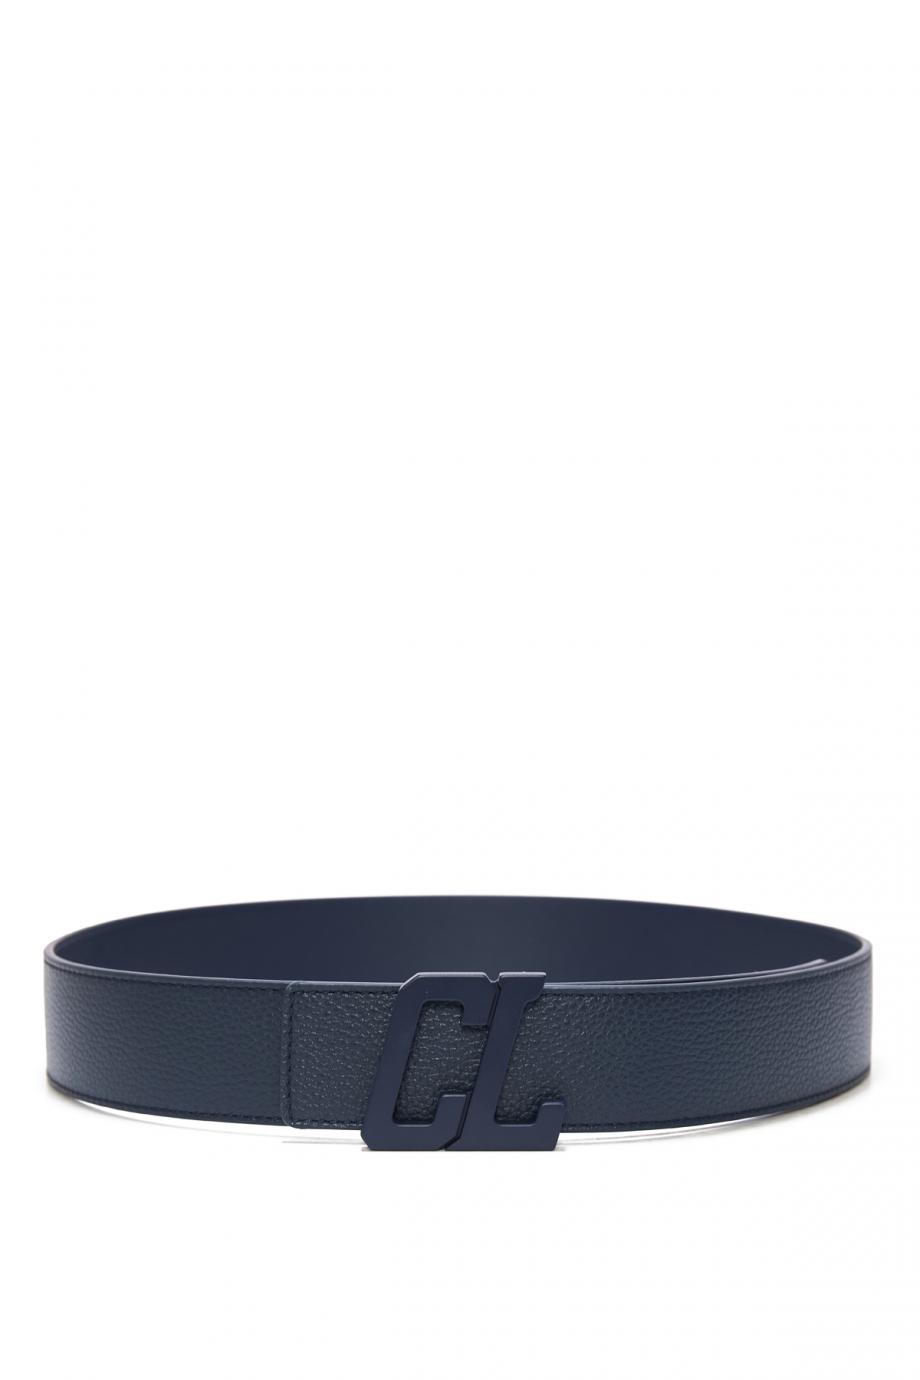 Christian Louboutin CL Logo Leather Belt